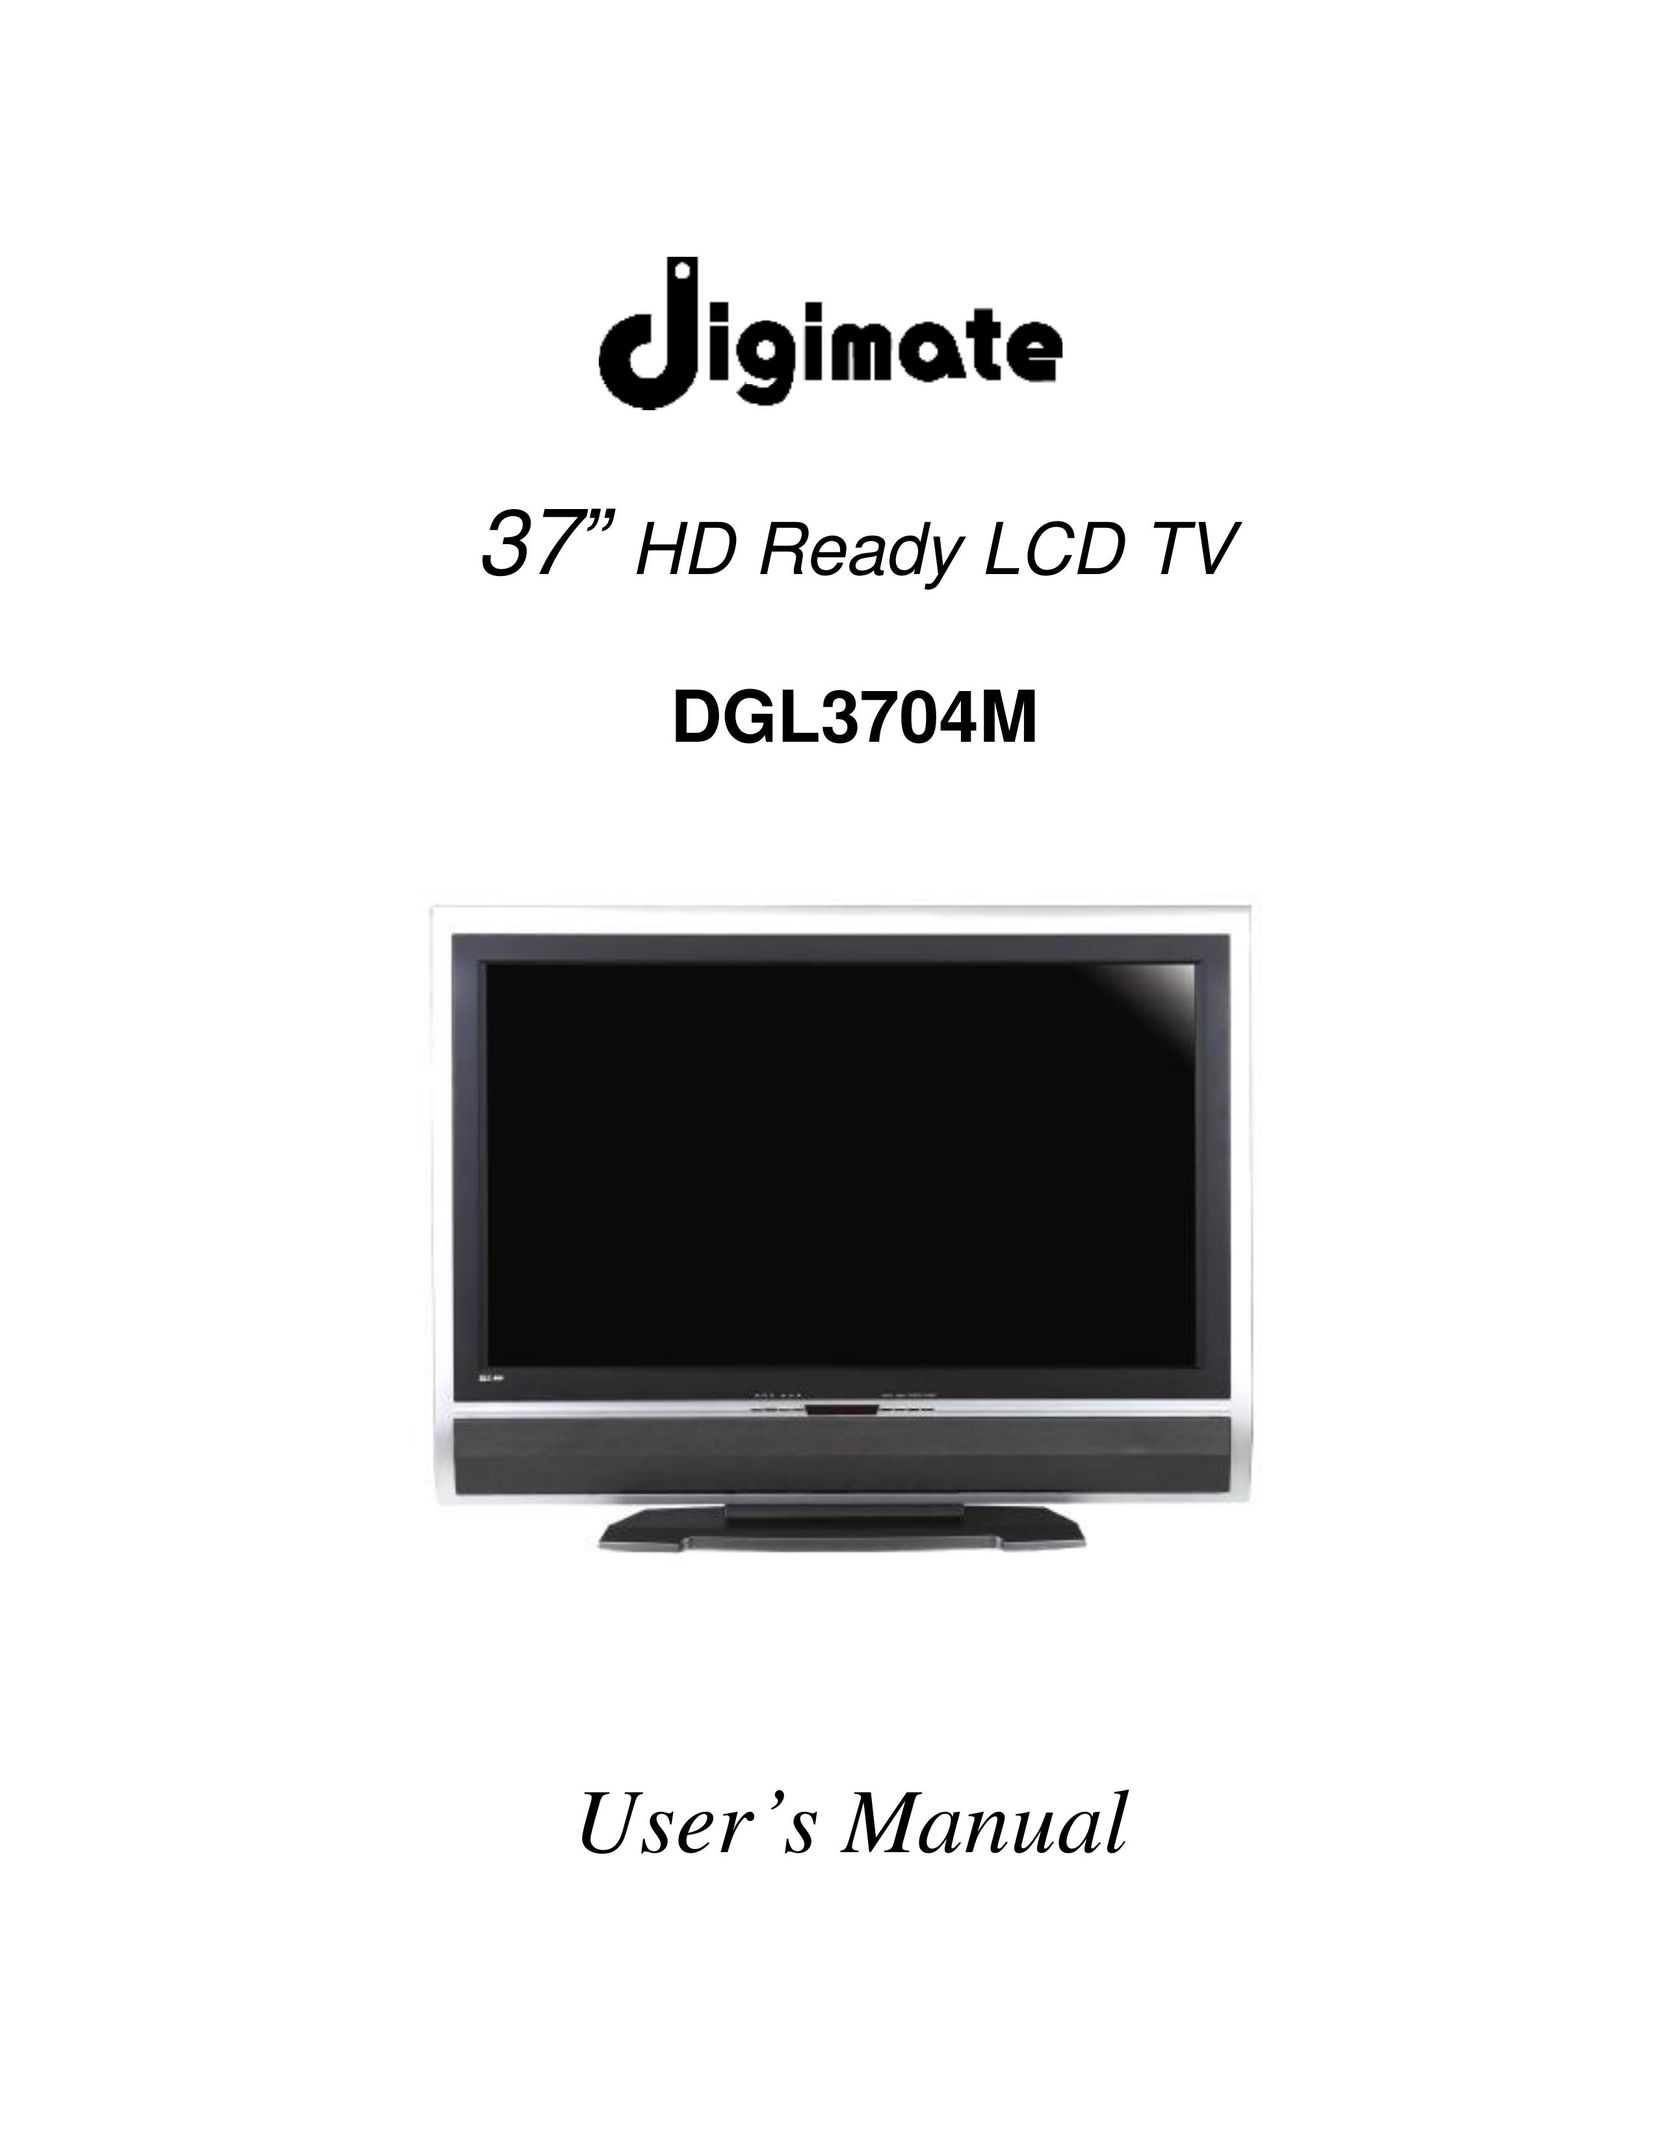 Digimate DGL3704M Flat Panel Television User Manual